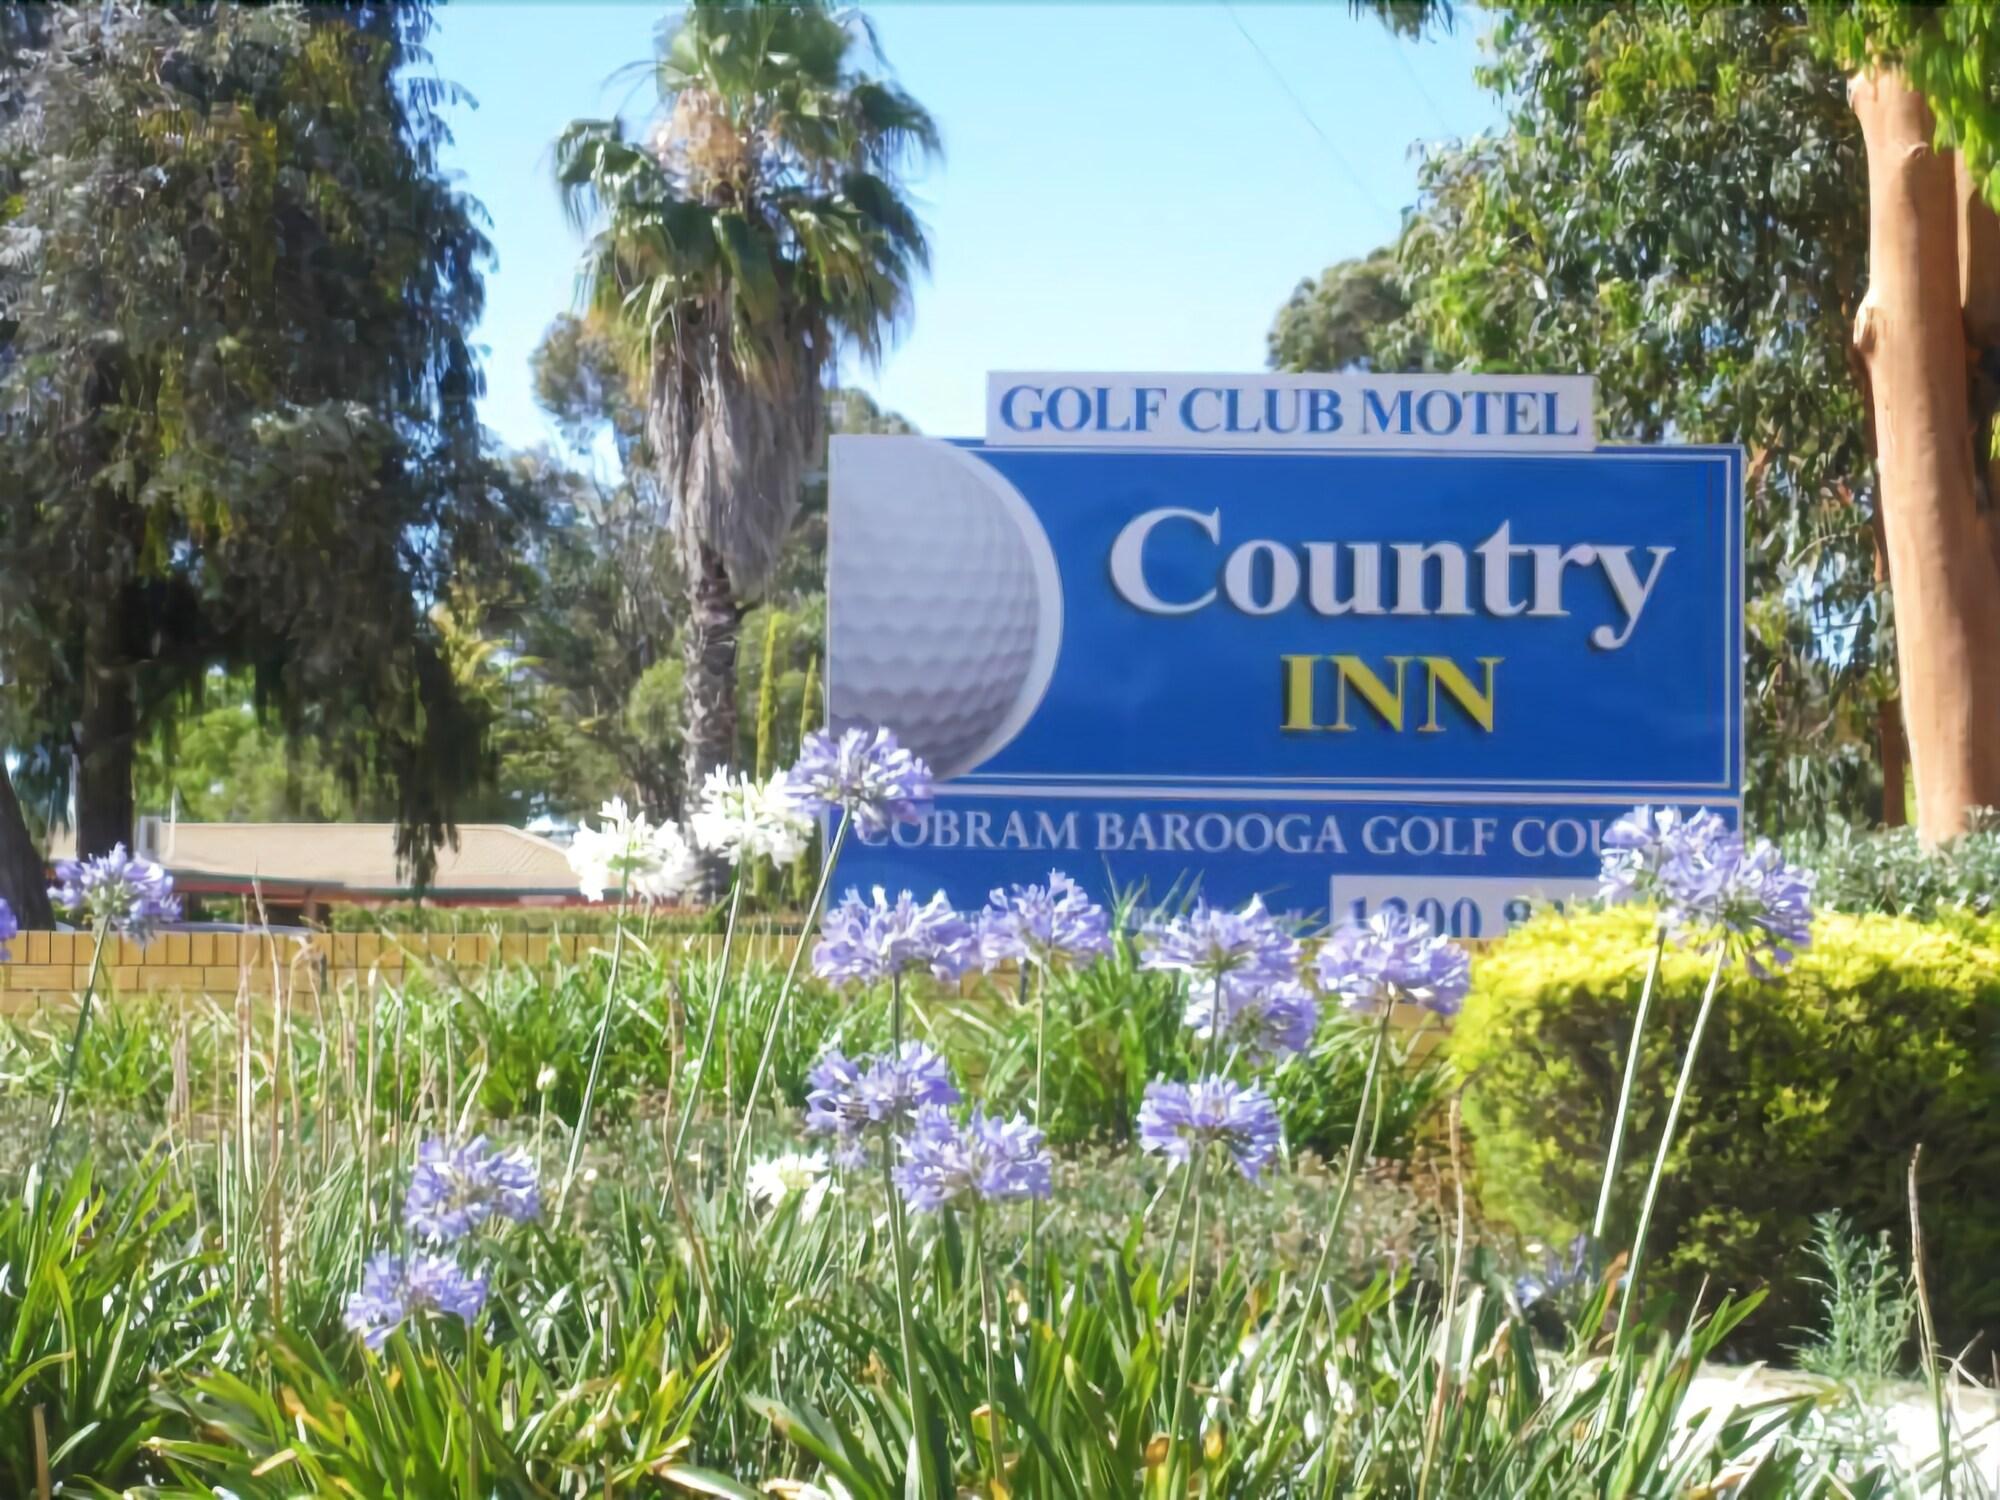 Country Inn Cobram Barooga Golf Club Motel